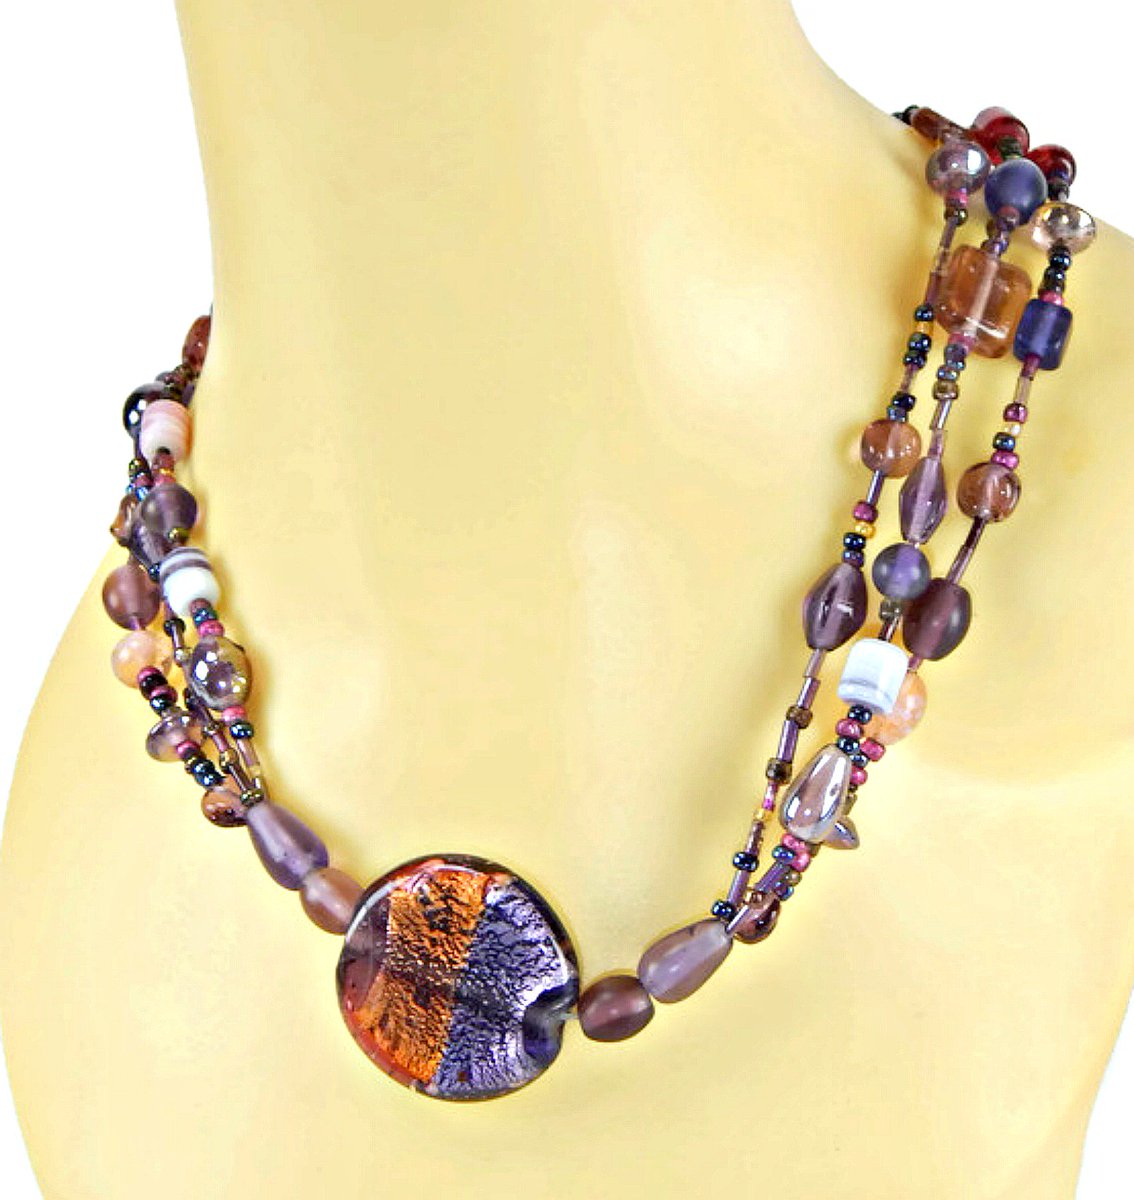 etsy.me/2Lr6lW0 #MultiStrand #DicroicandArtGlass Beads #Pendant #Necklace #PurpleandAmber #ThreeRows #modern #boho #festival #vintage #jewelry #GotVintage